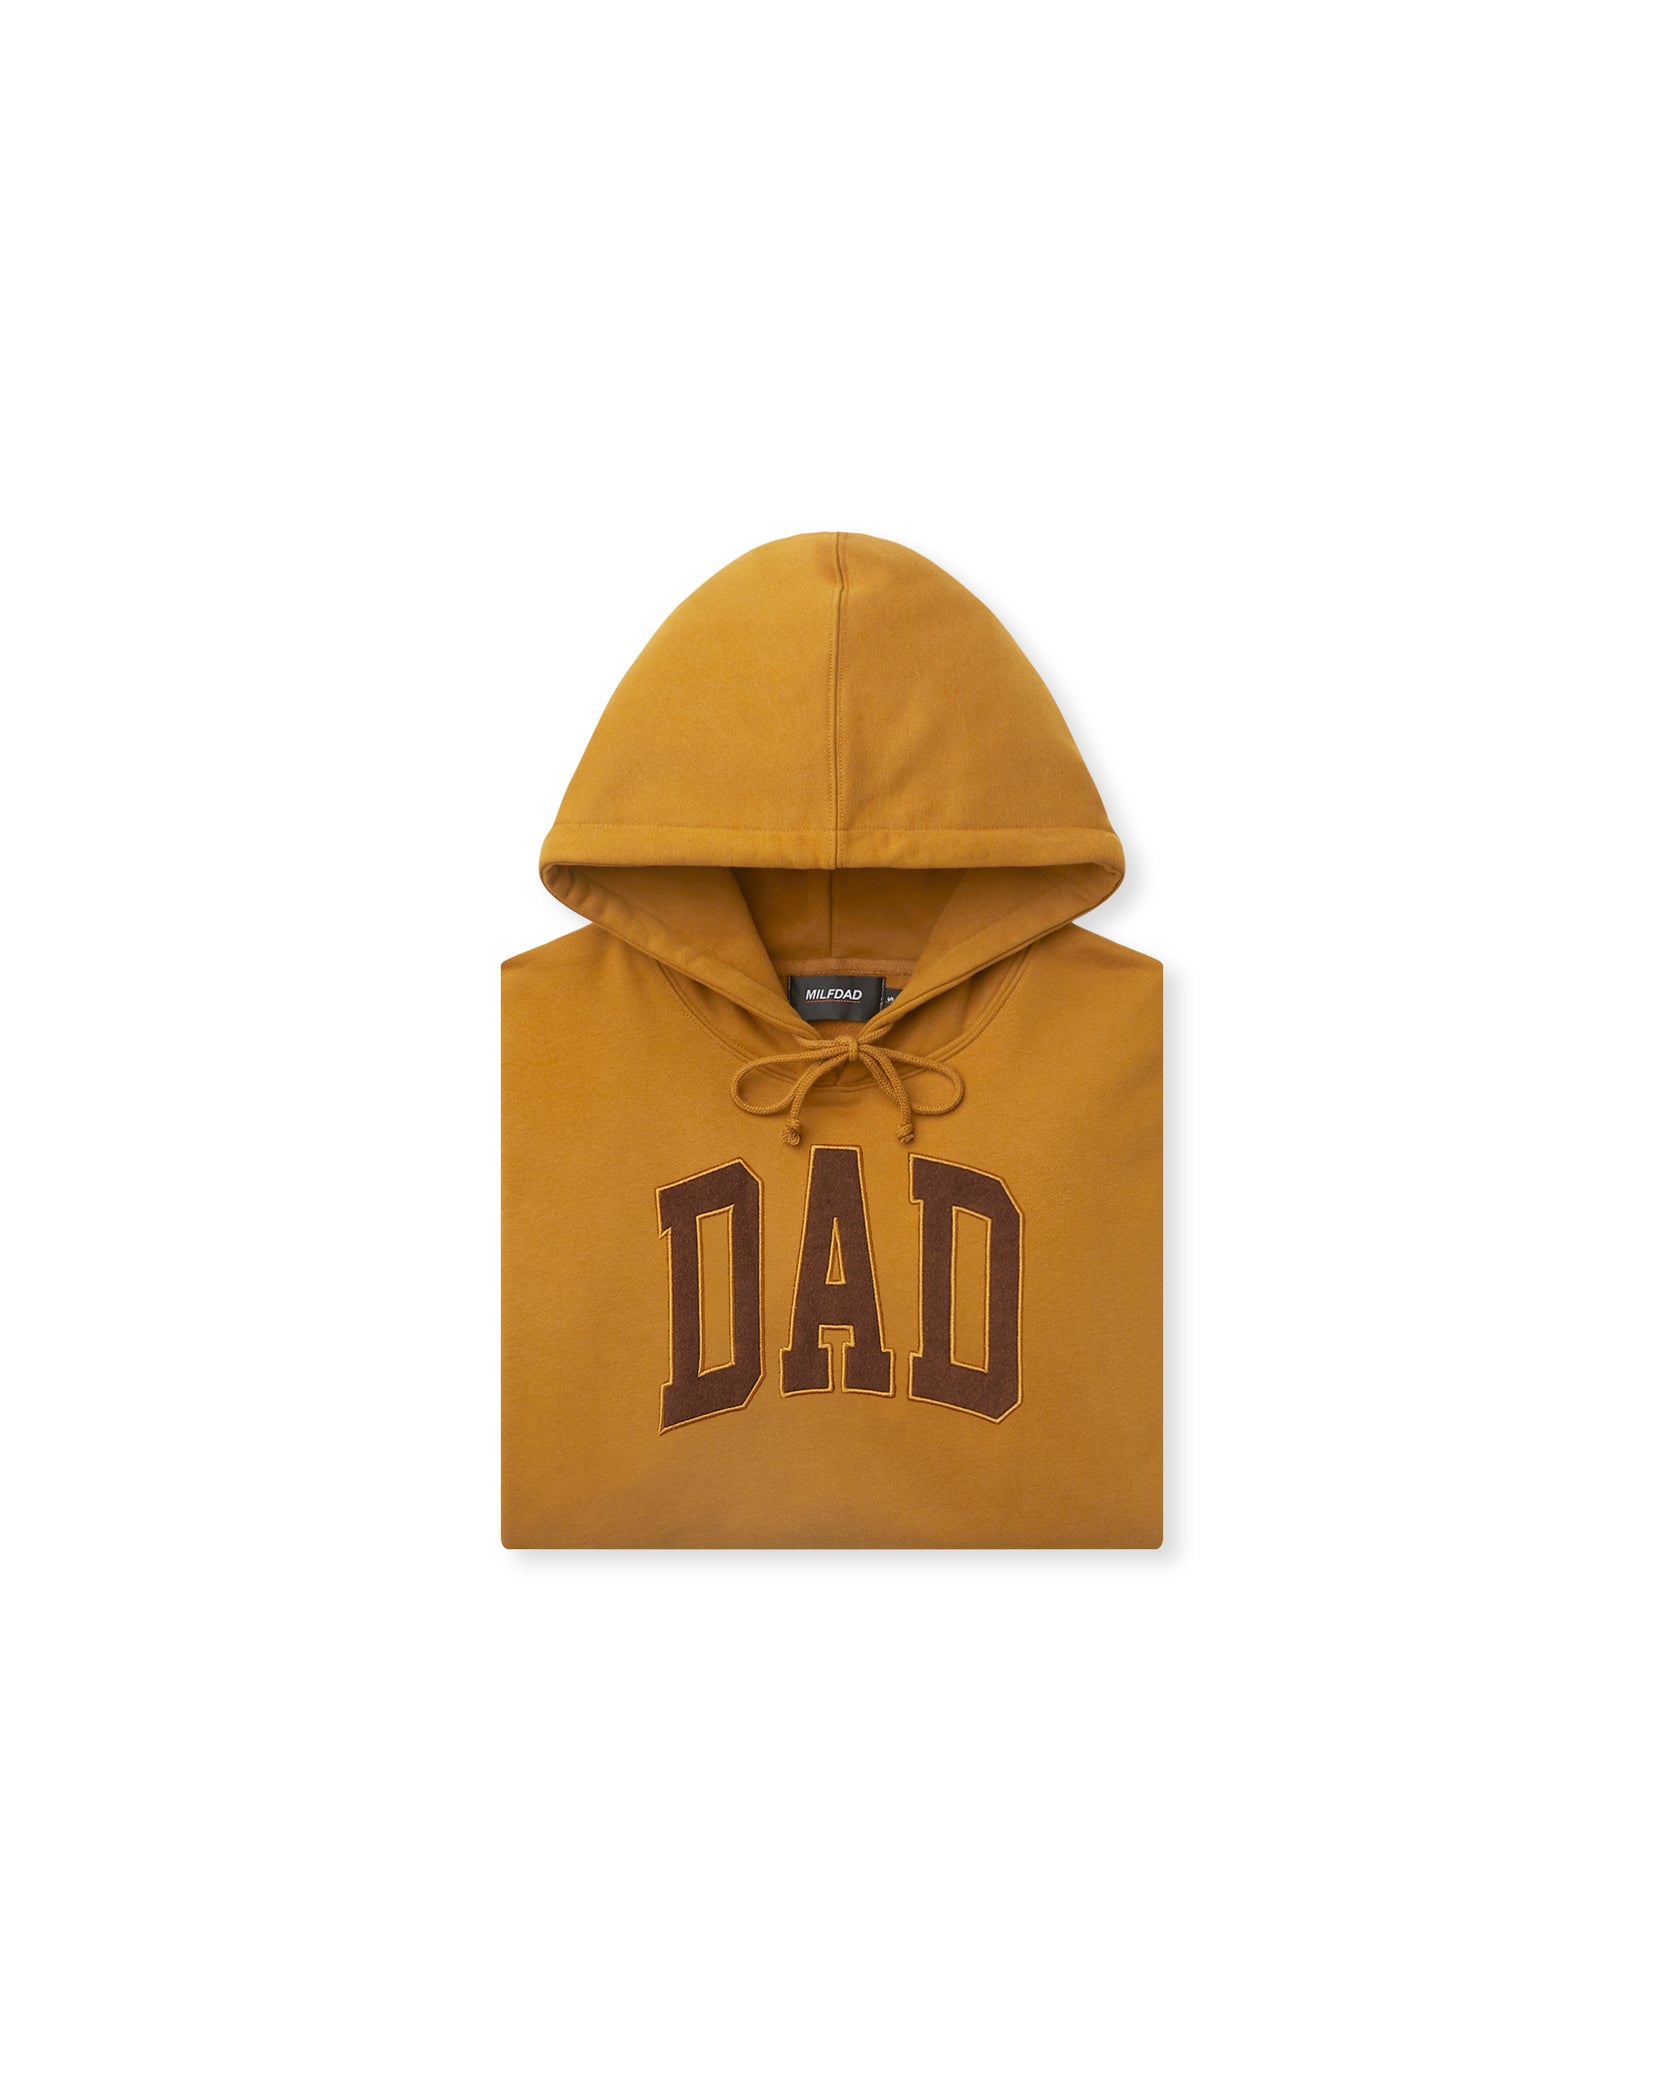 DAD Arc Logo Hoodie - Light Brown